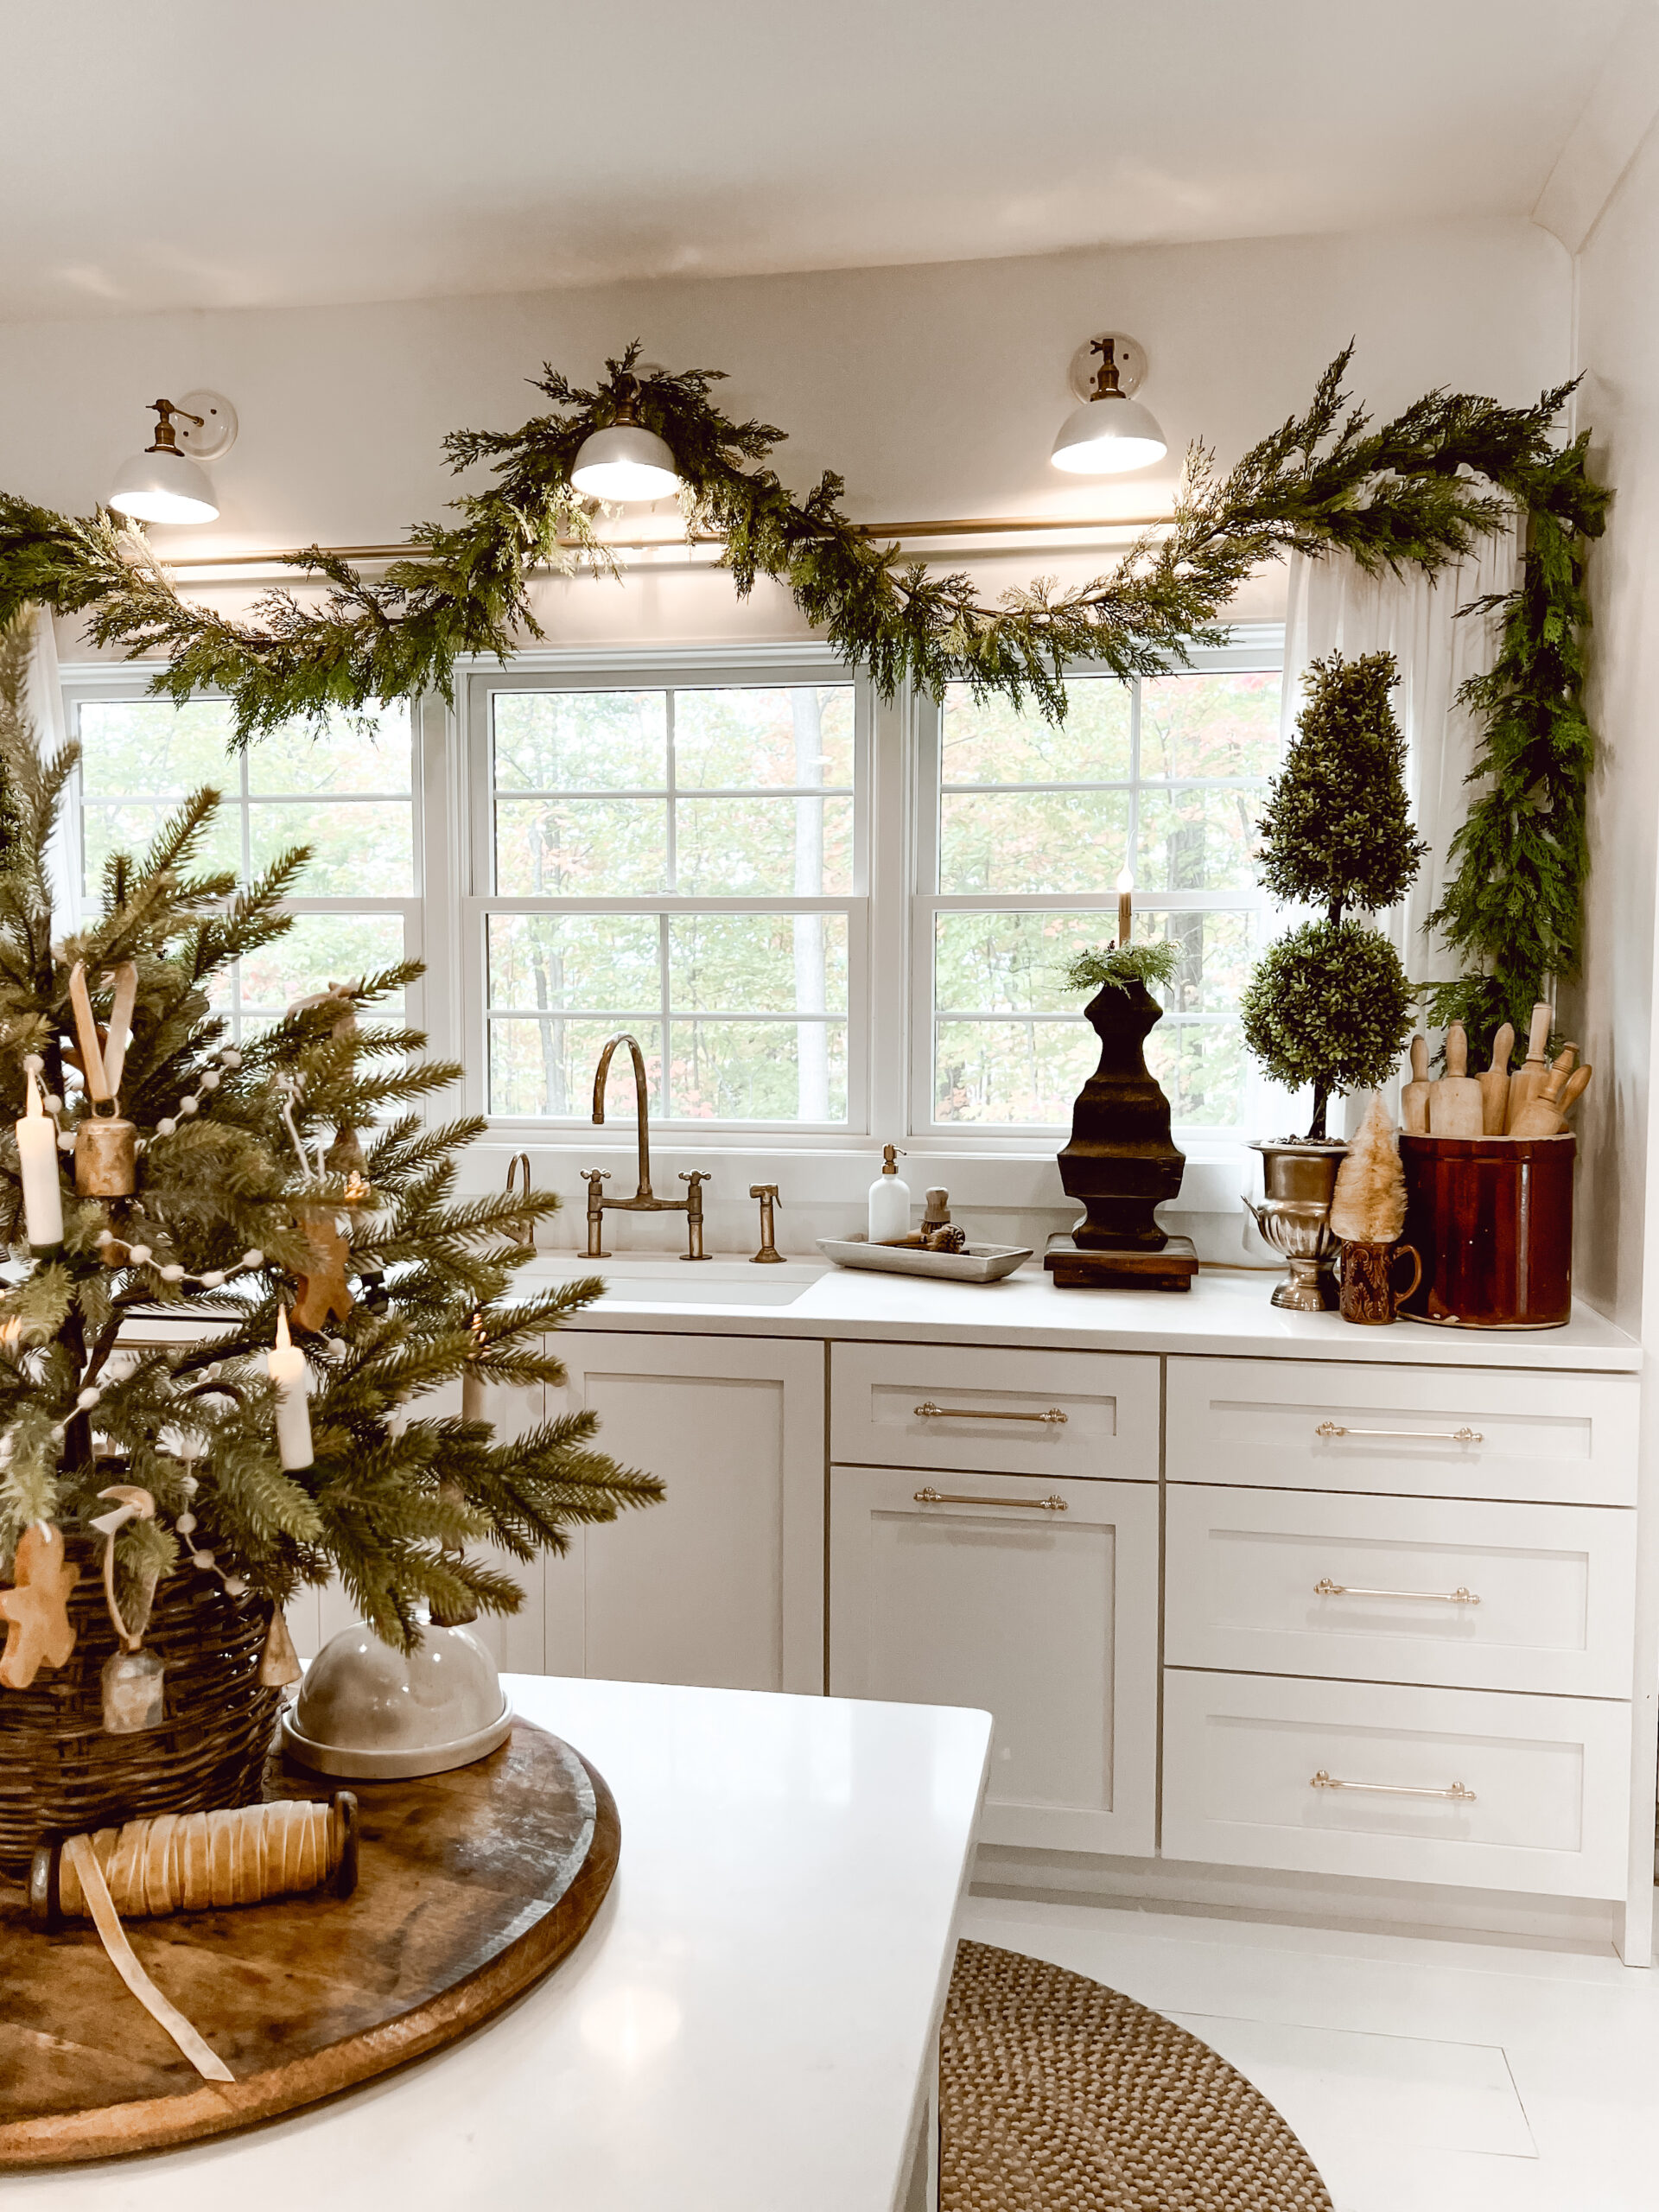 Woodland Christmas in the kitchen - kitchen decor